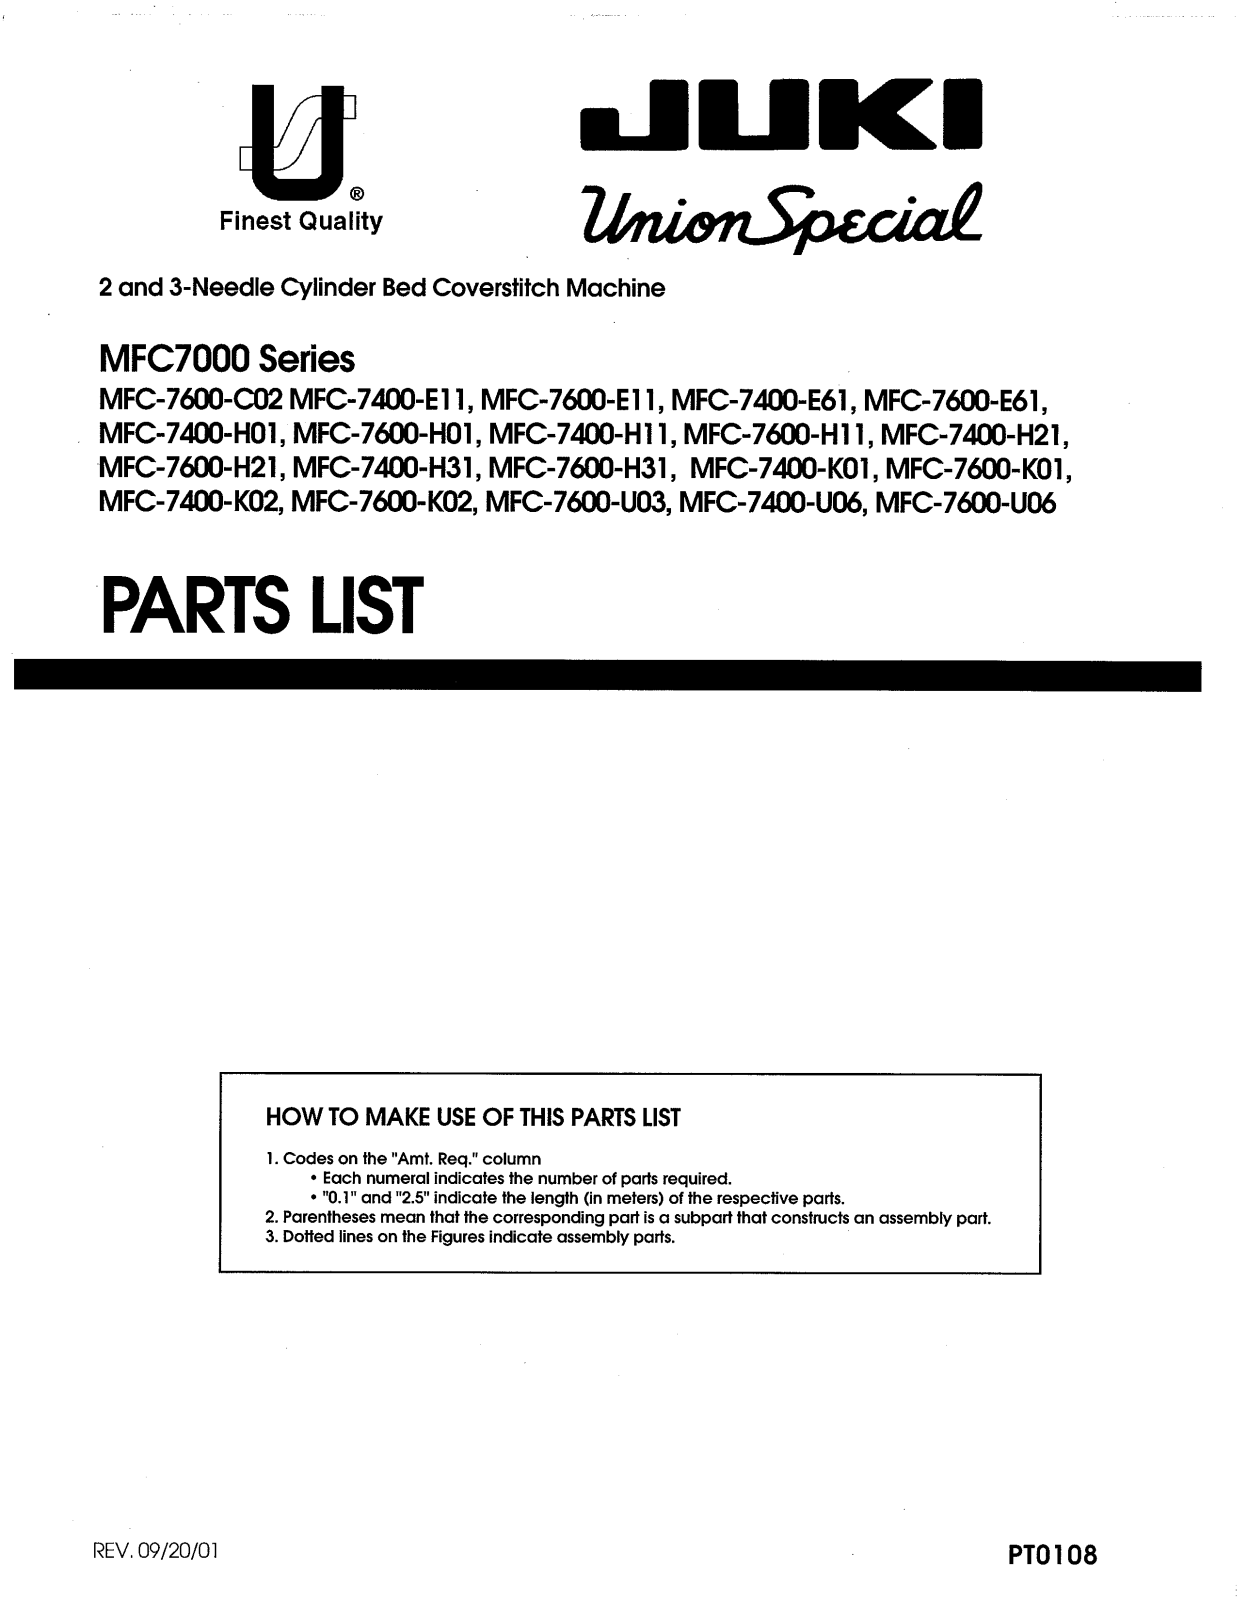 Union Special MFC7400-E11, MFC7400-E61, MFC7400-H01, MFC7400-H11, MFC7400-H21 Parts List